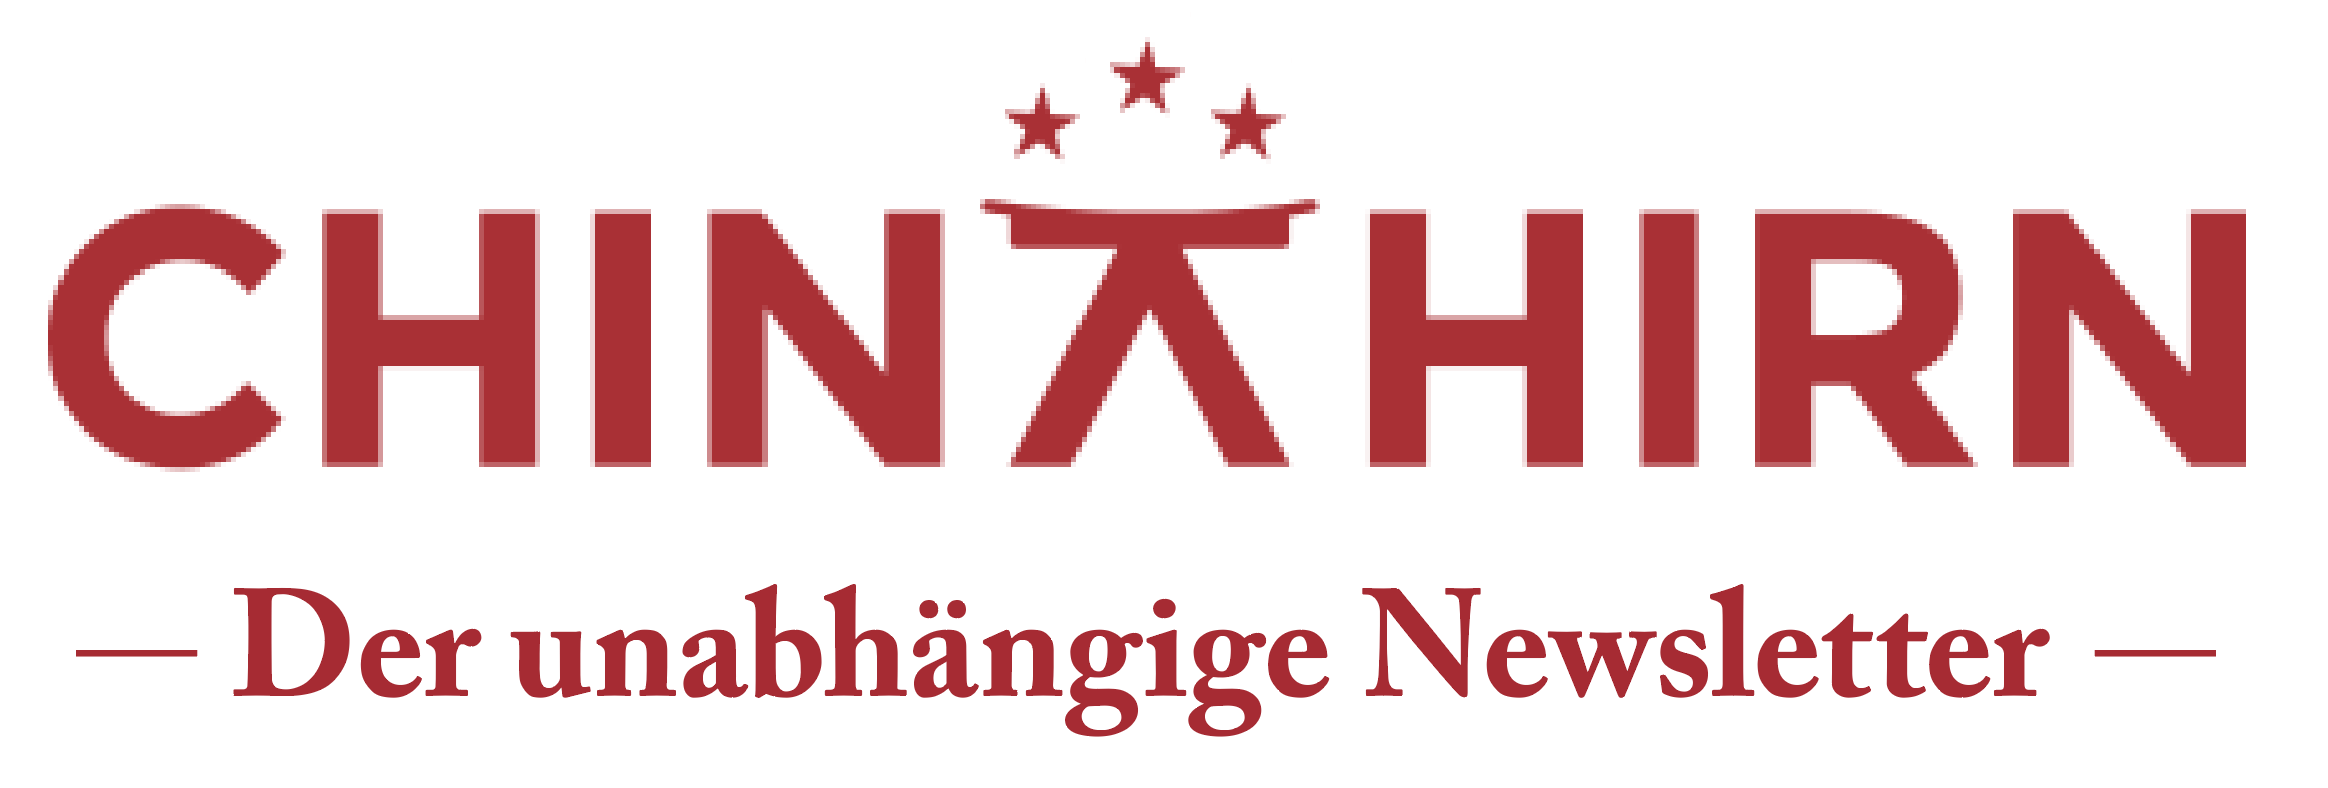 chinahirn unabh Newsletter header 1